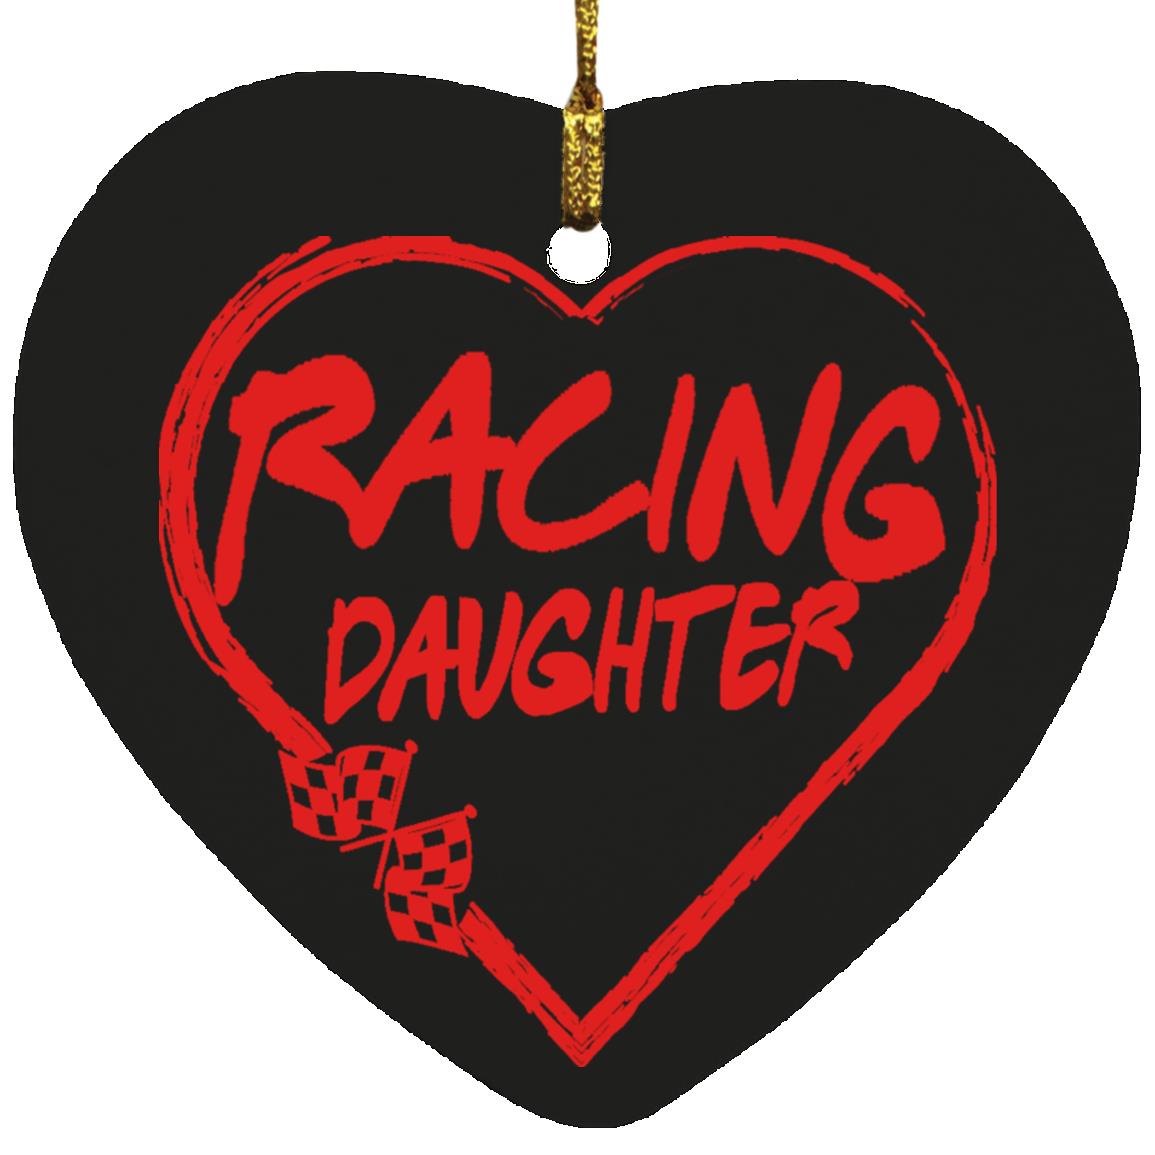 Racing Daughter Heart Heart Ornament